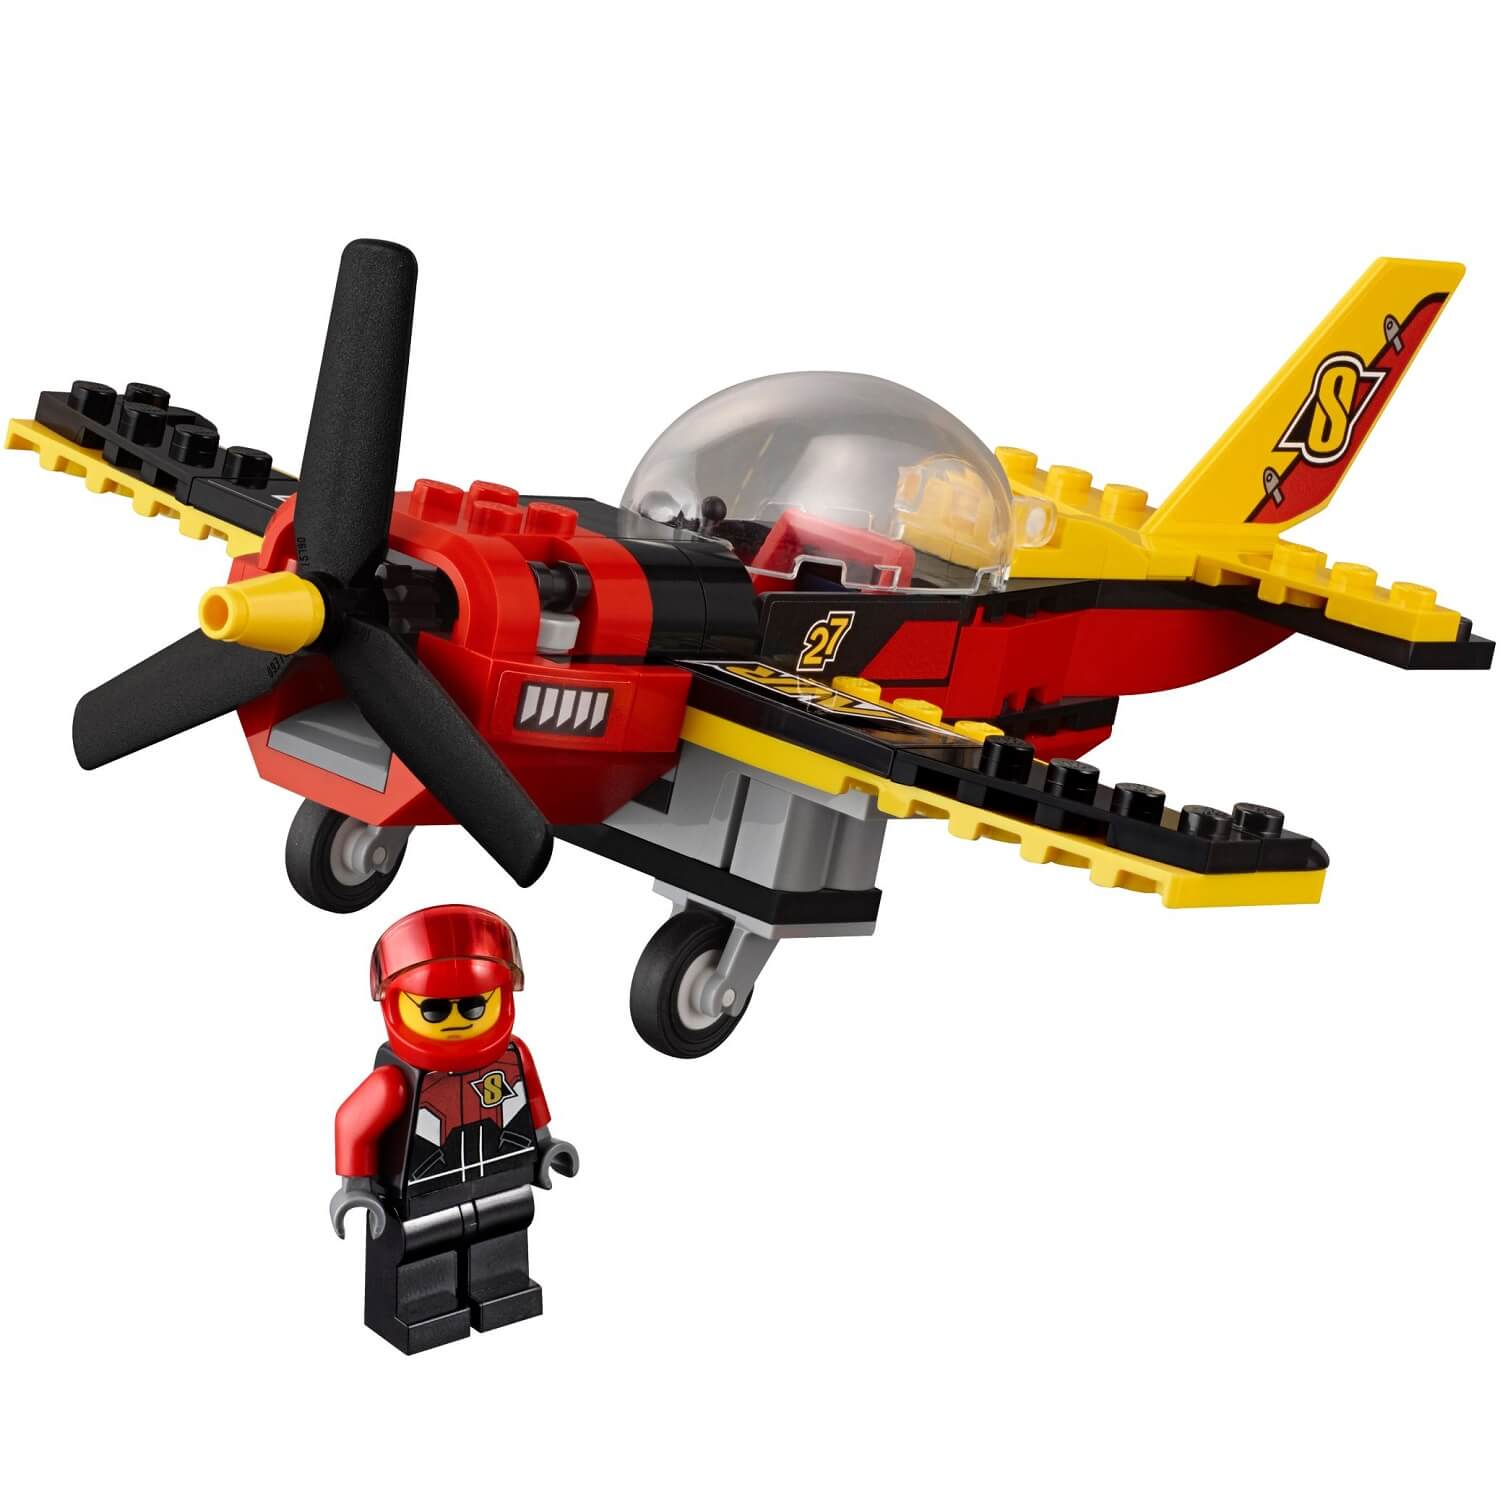 Avión carreras ( Lego 60144 ) imagen a